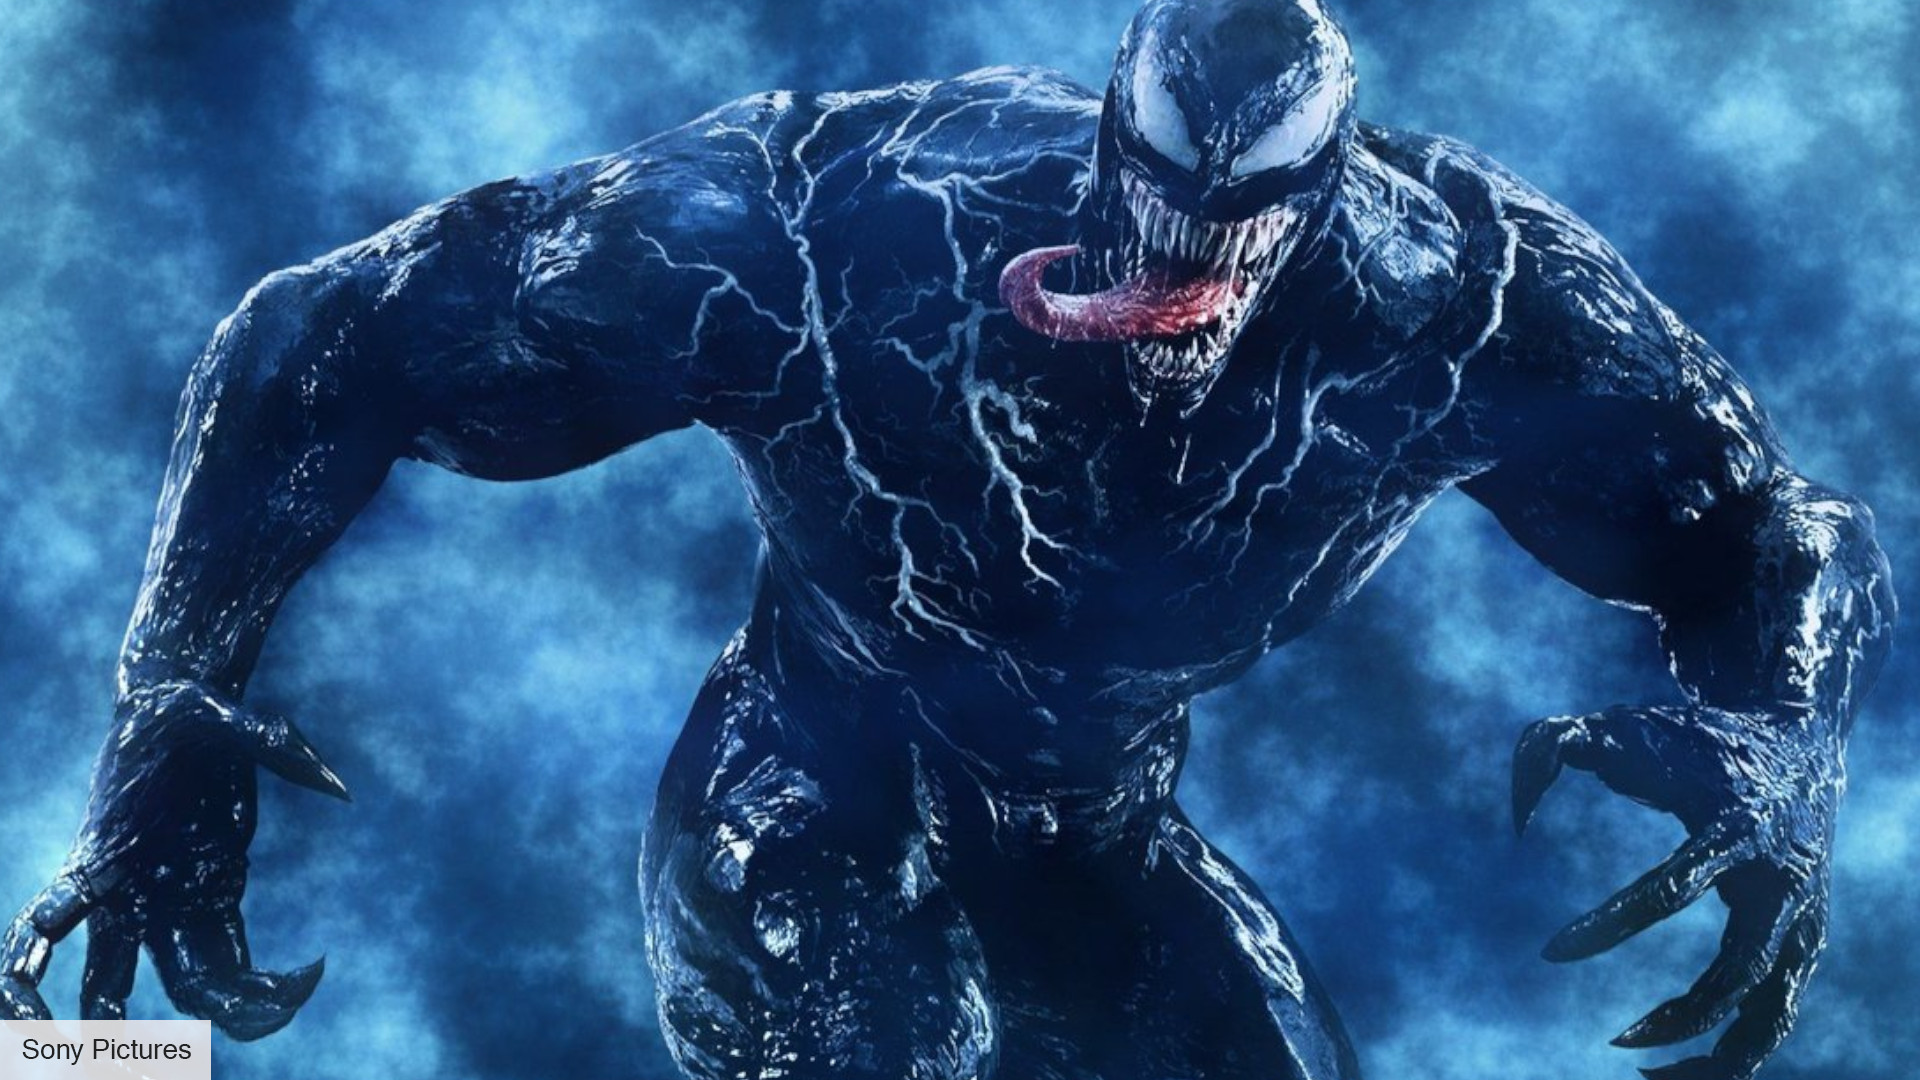 Venom 2's post-credit sting is lazy world-building